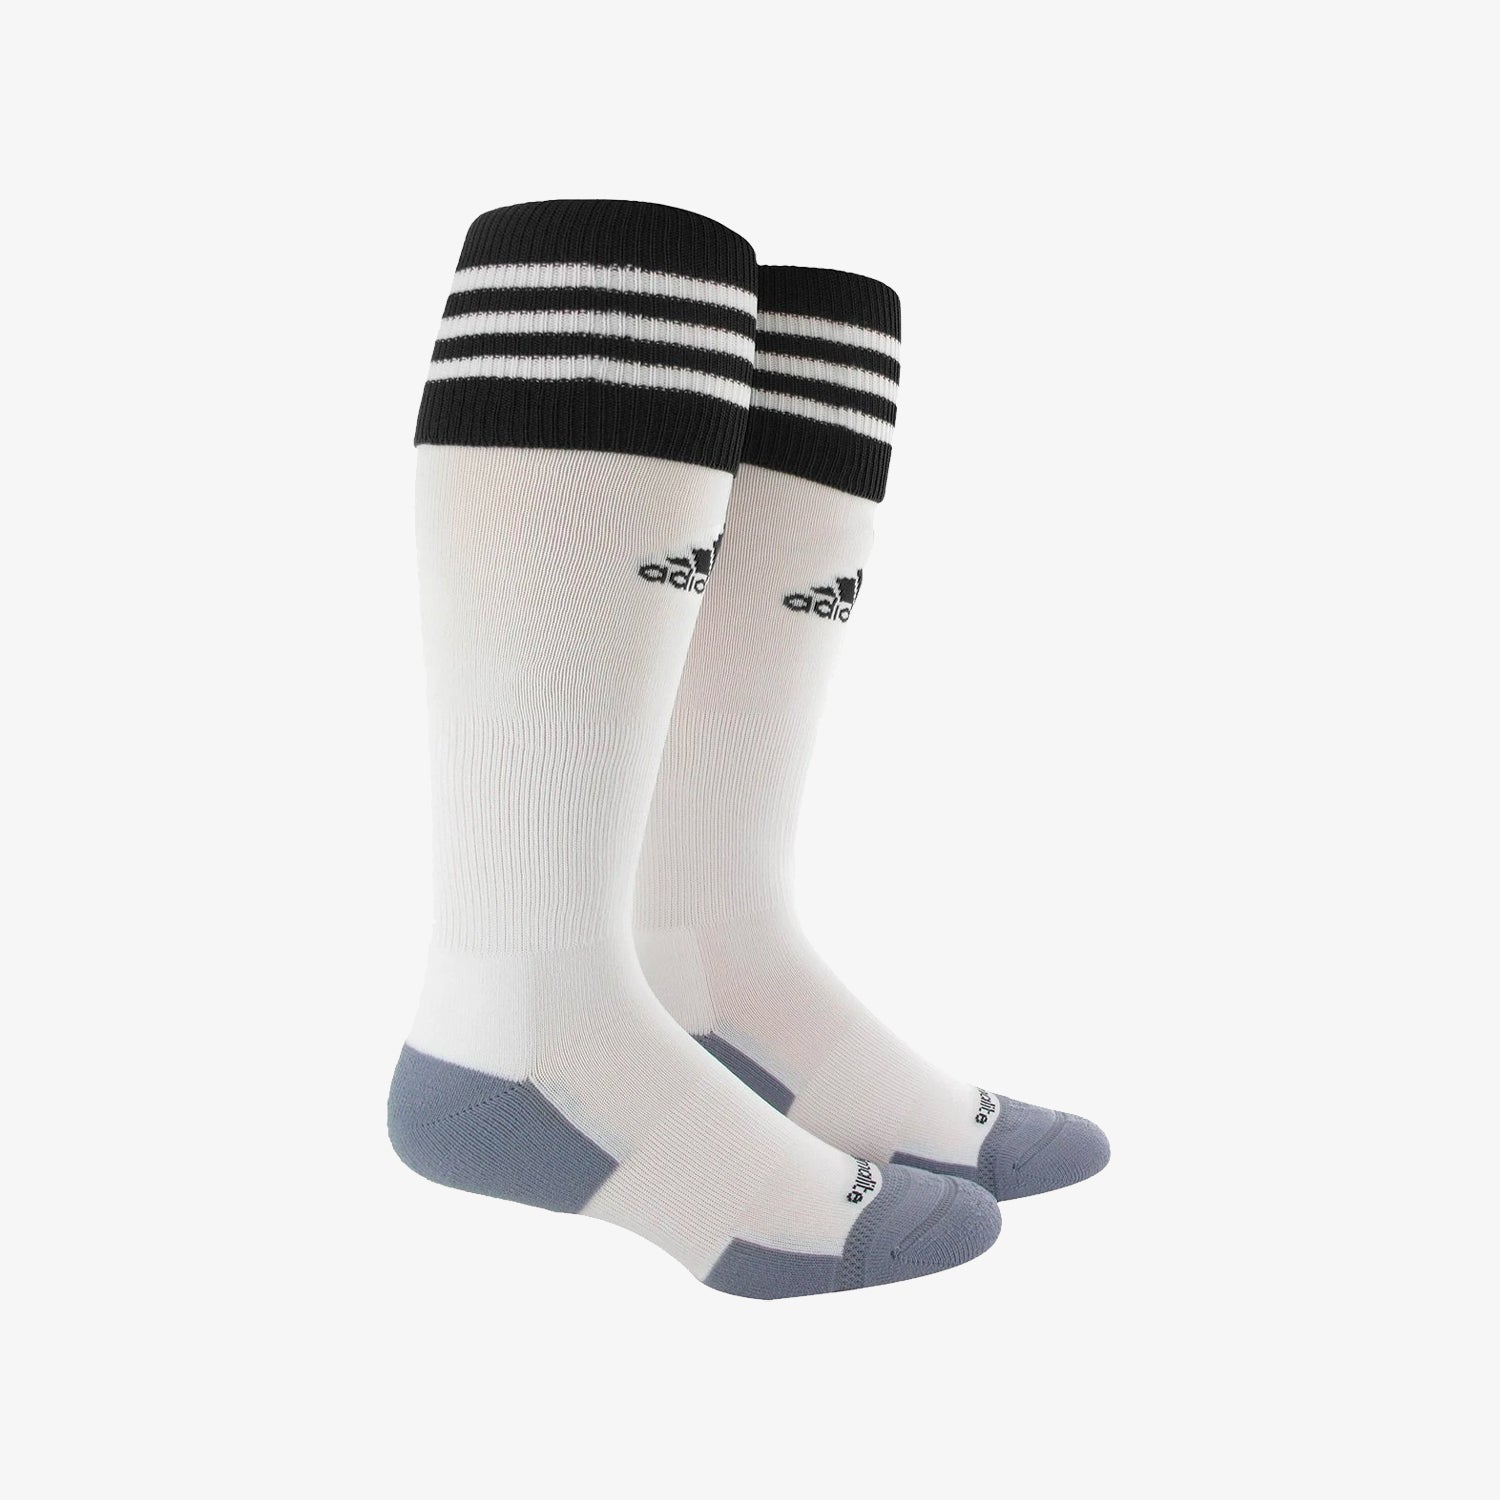 Copa Zone Cushion 2.0 Soccer Socks Medium - White/Black